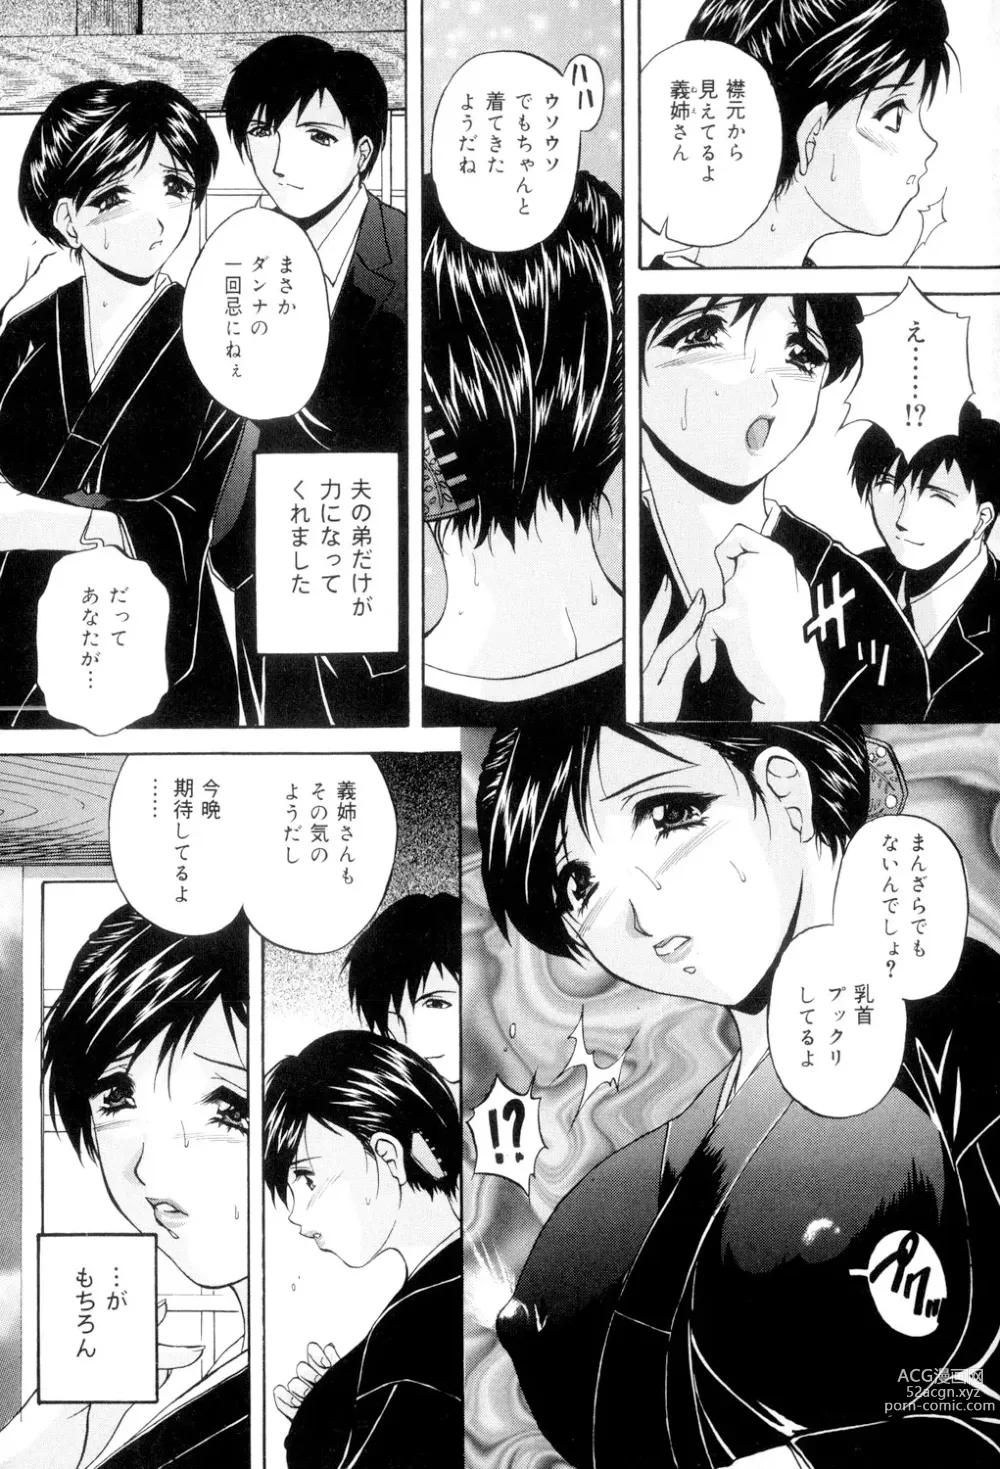 Page 4 of manga Aniyome no Himitsu